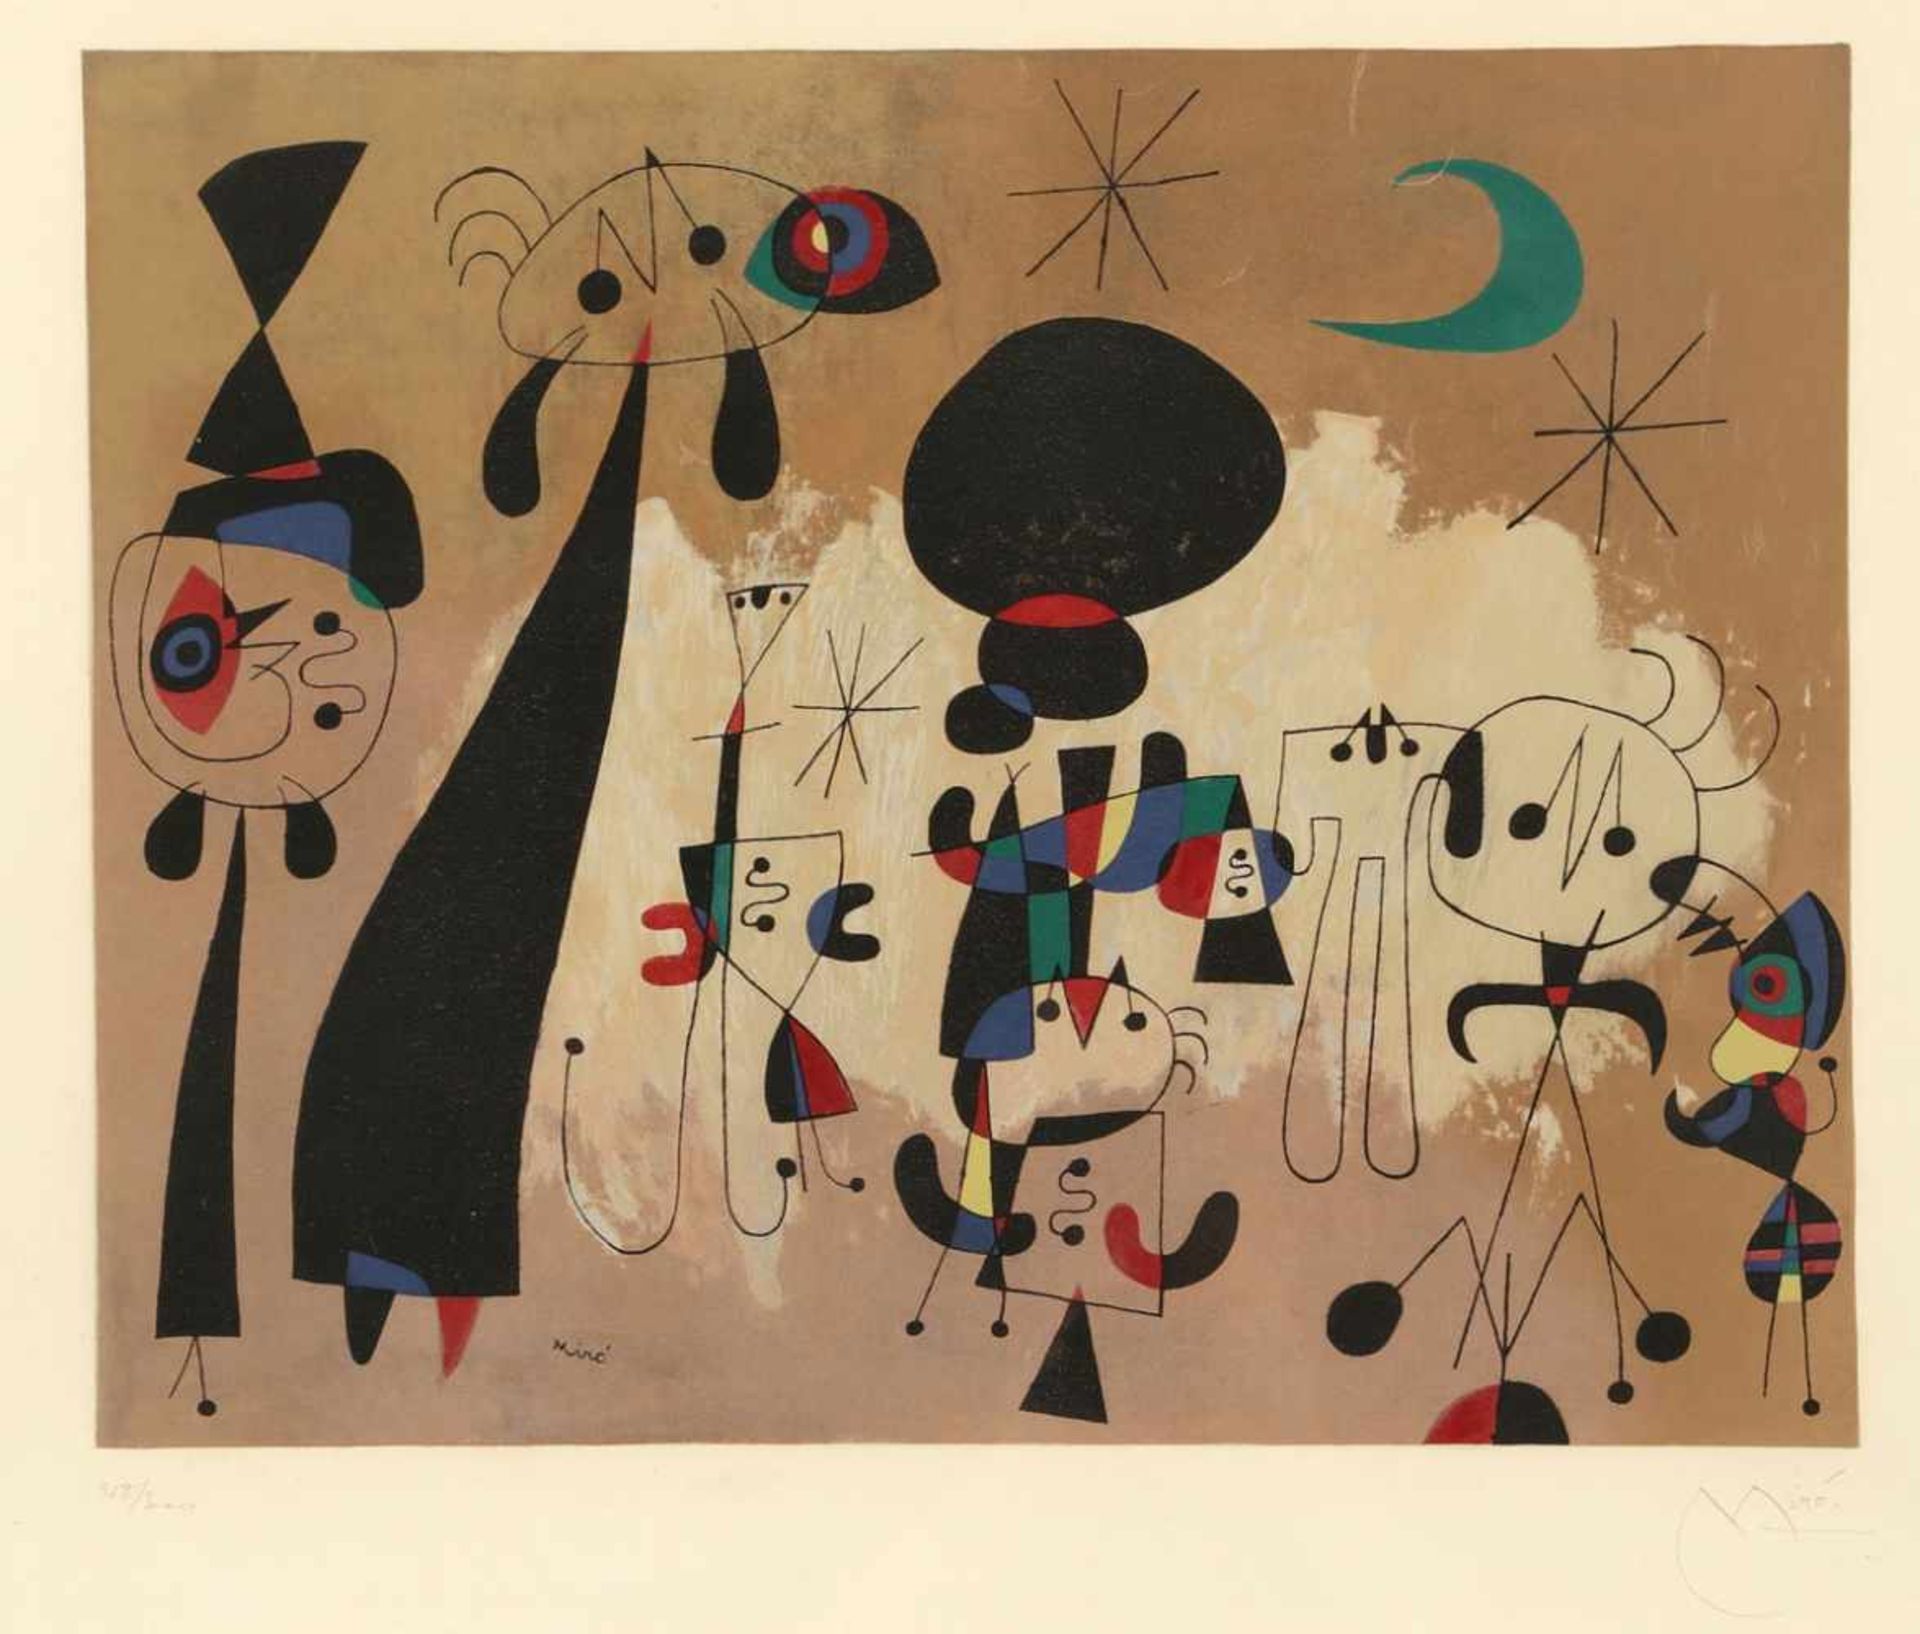 Joan Miró 1893 Barcelona - 1983 Palma nach - "Femme, lune, étoile" - Farblithografie/Rives. 218/300.